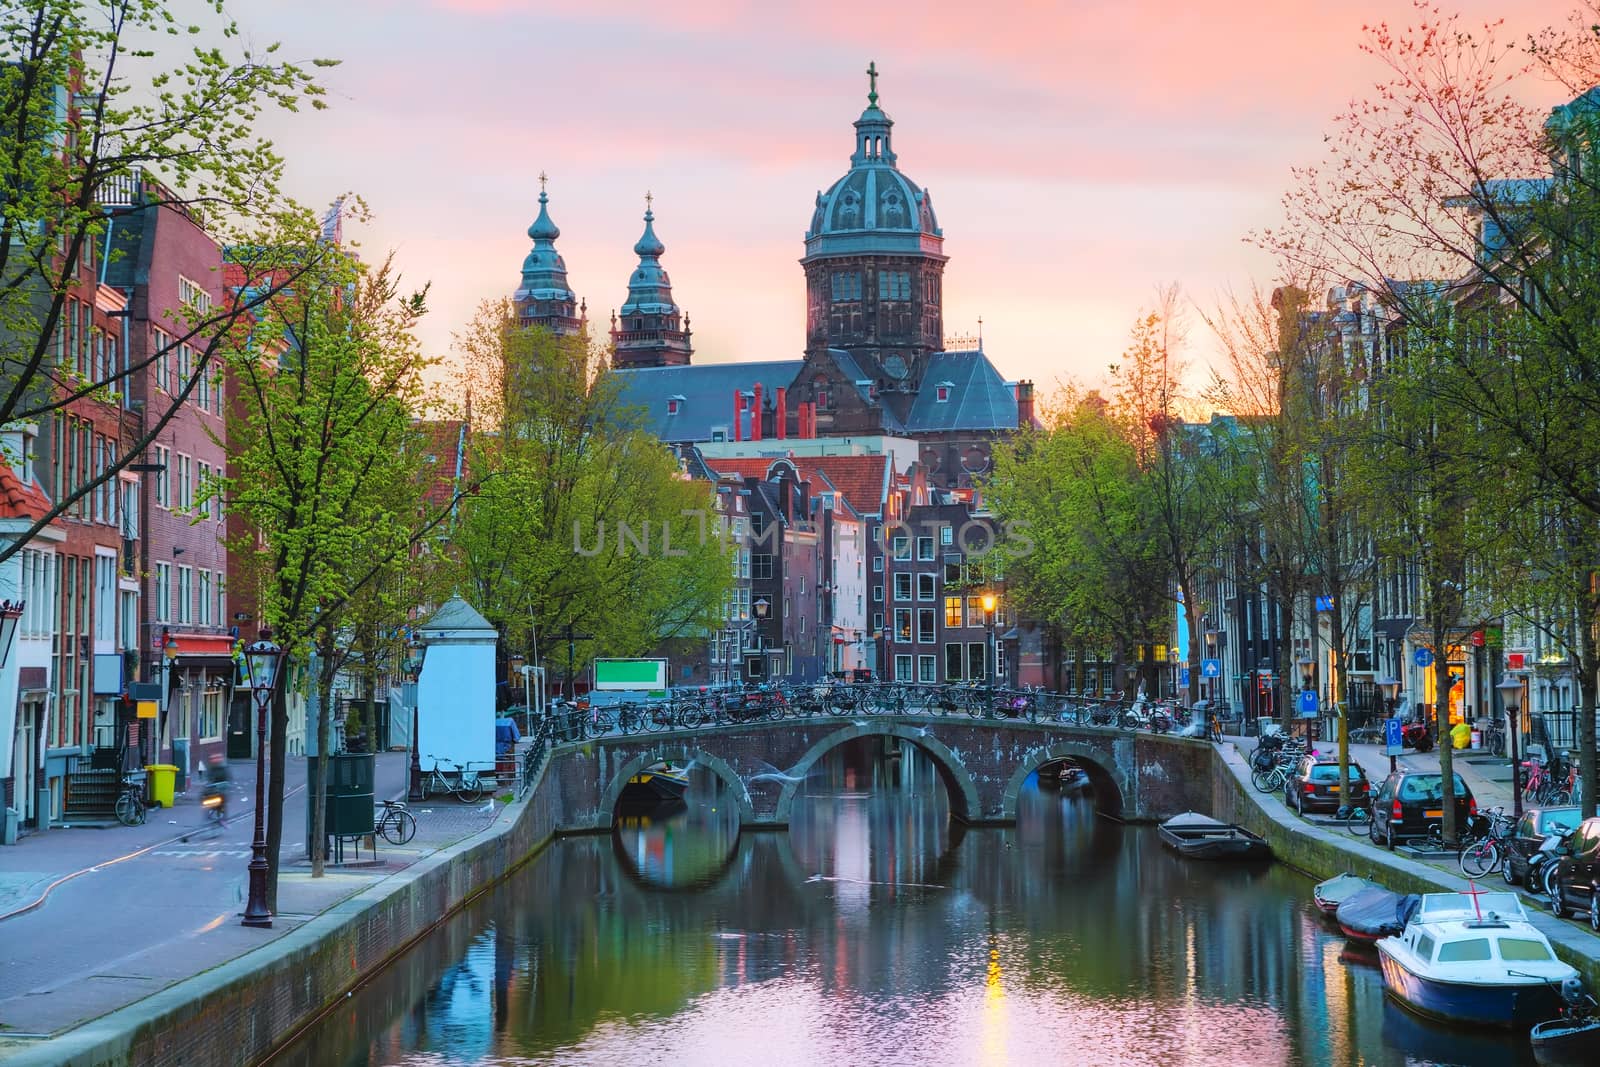 The Basilica of Saint Nicholas (Sint-Nicolaasbasiliek) in Amsterdam at sunrise